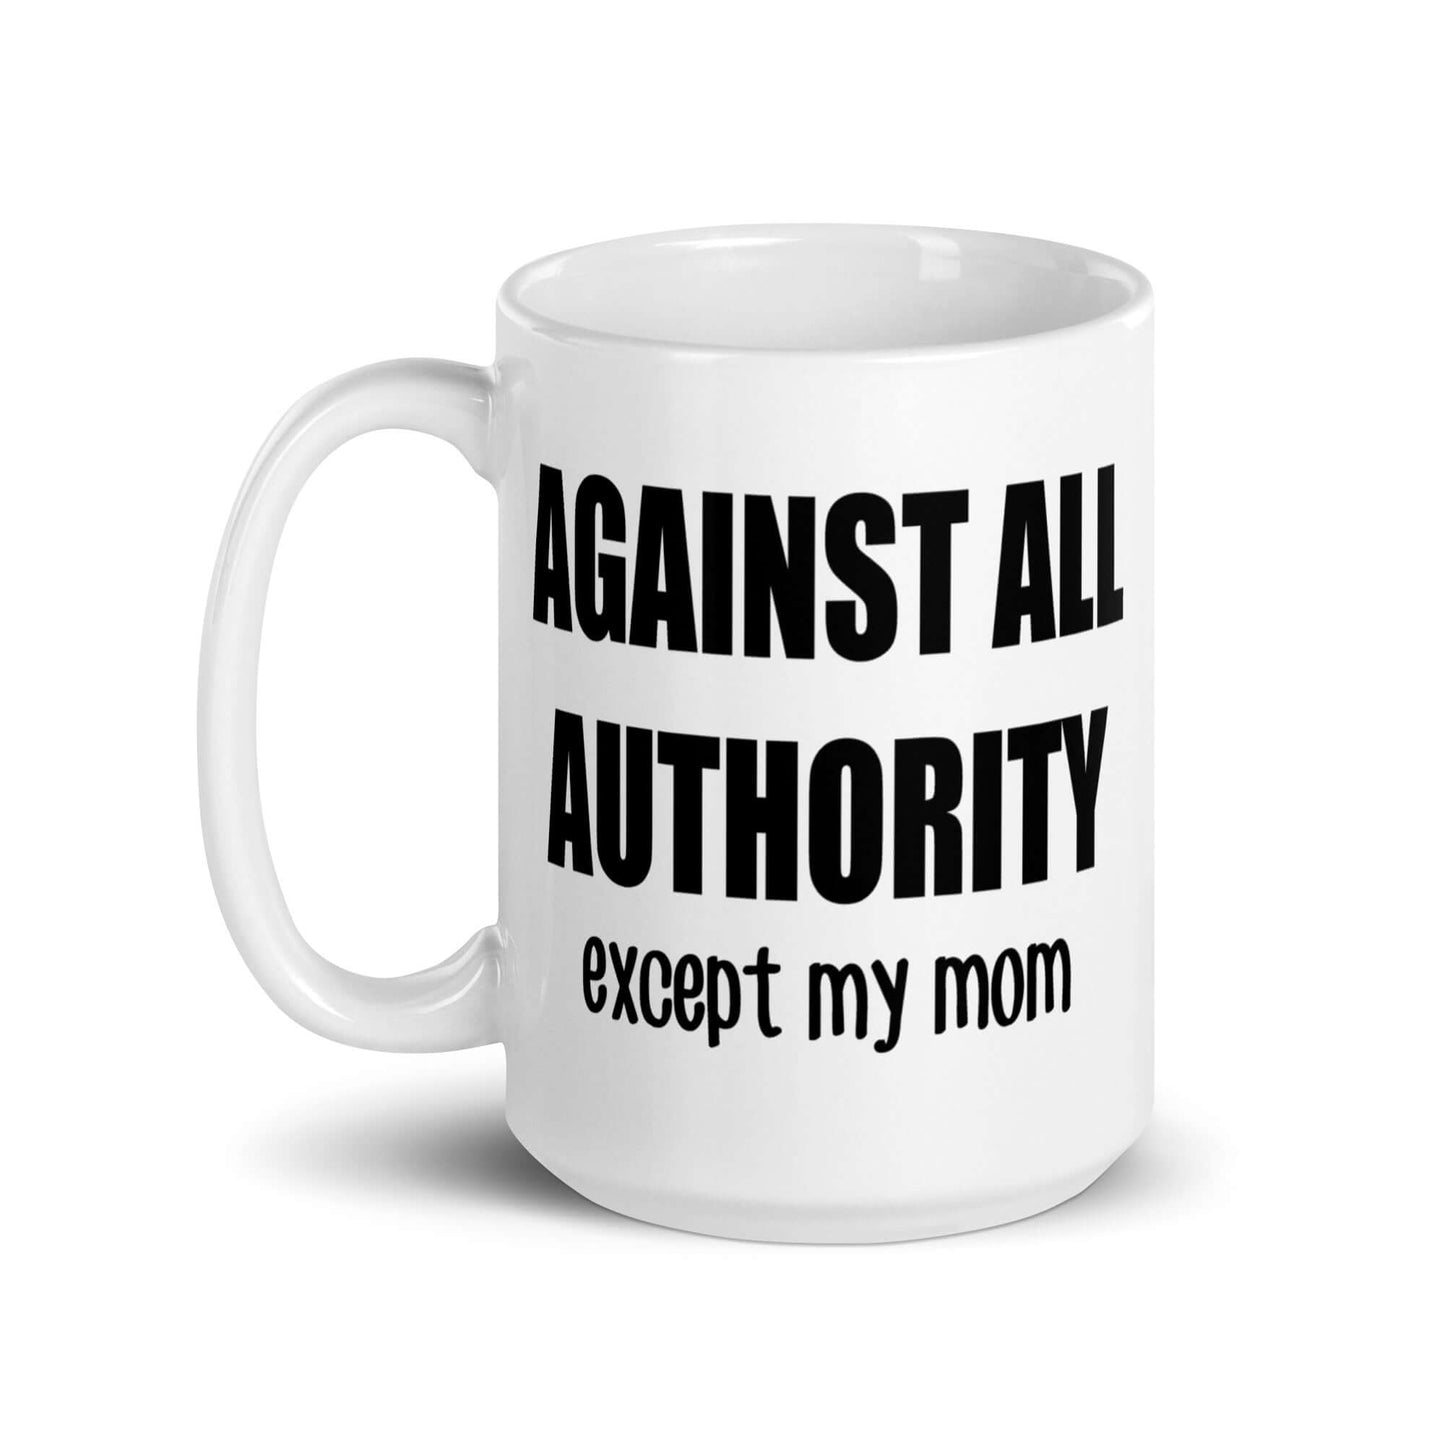 Against all authority except my mom ceramic mug